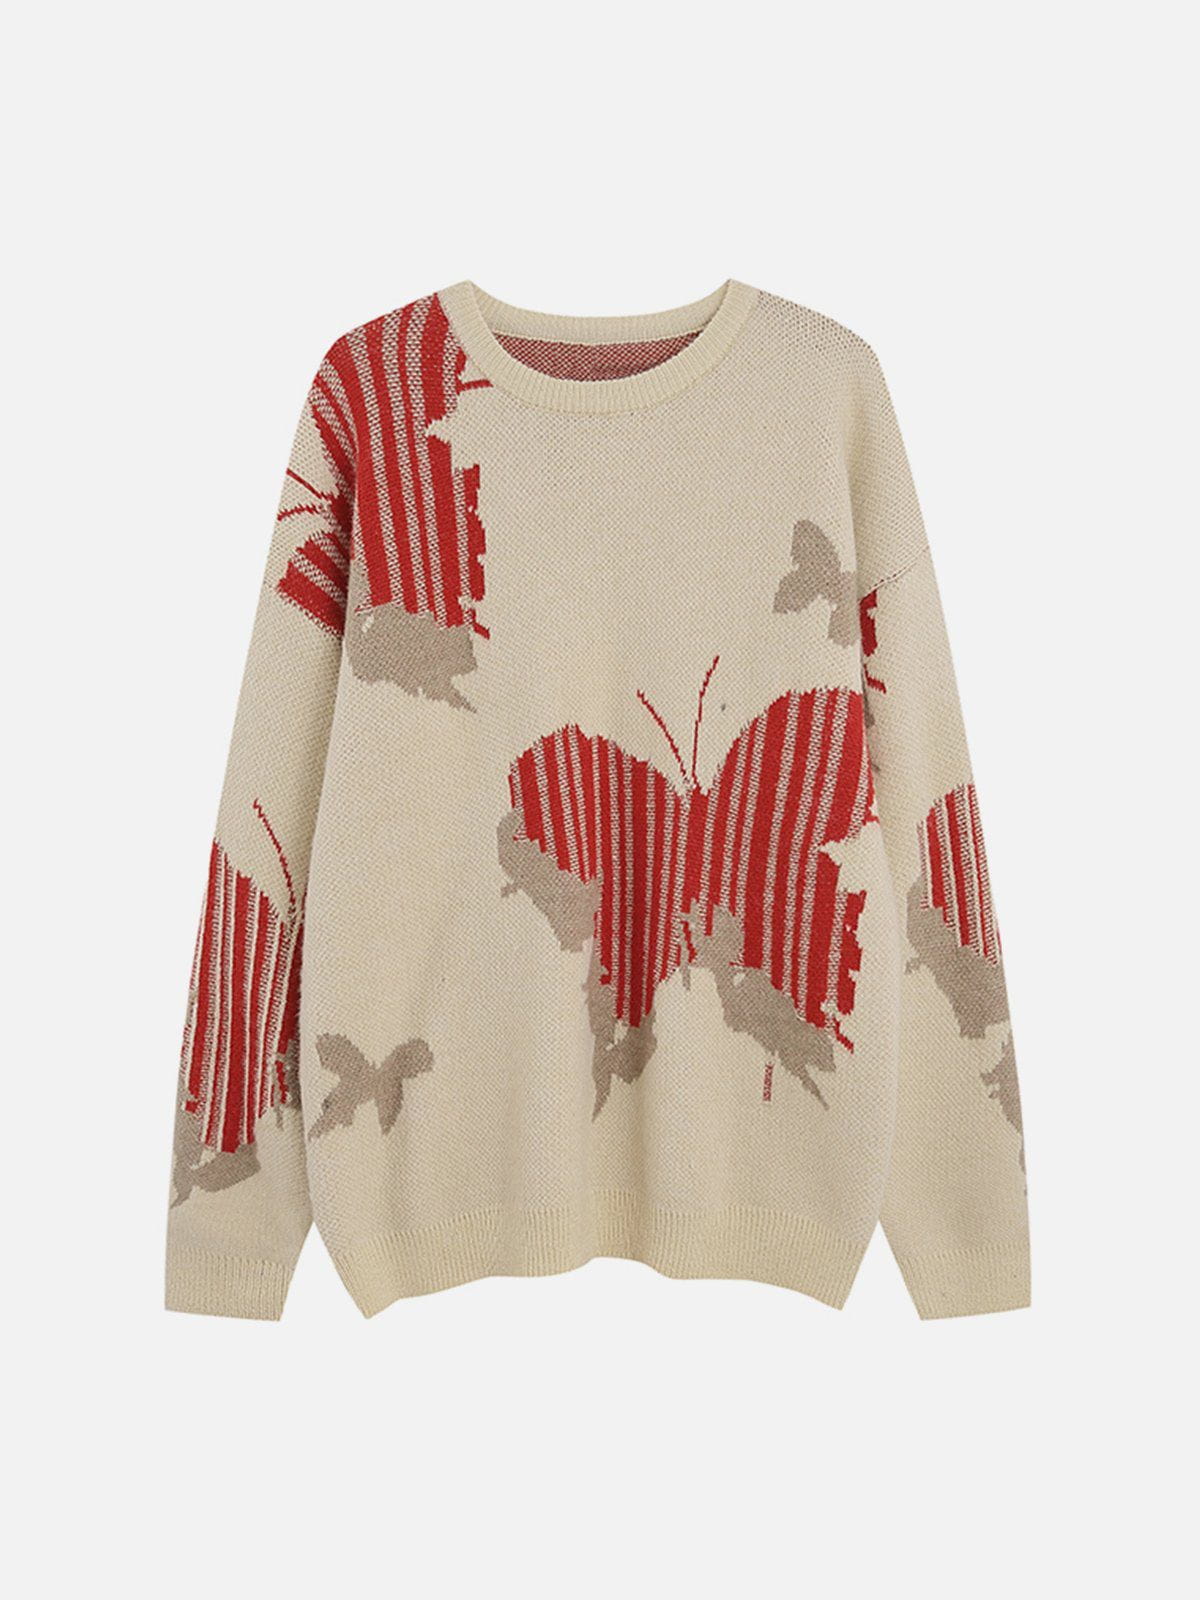 Majesda® - Butterfly Shadow Knit Sweater outfit ideas streetwear fashion